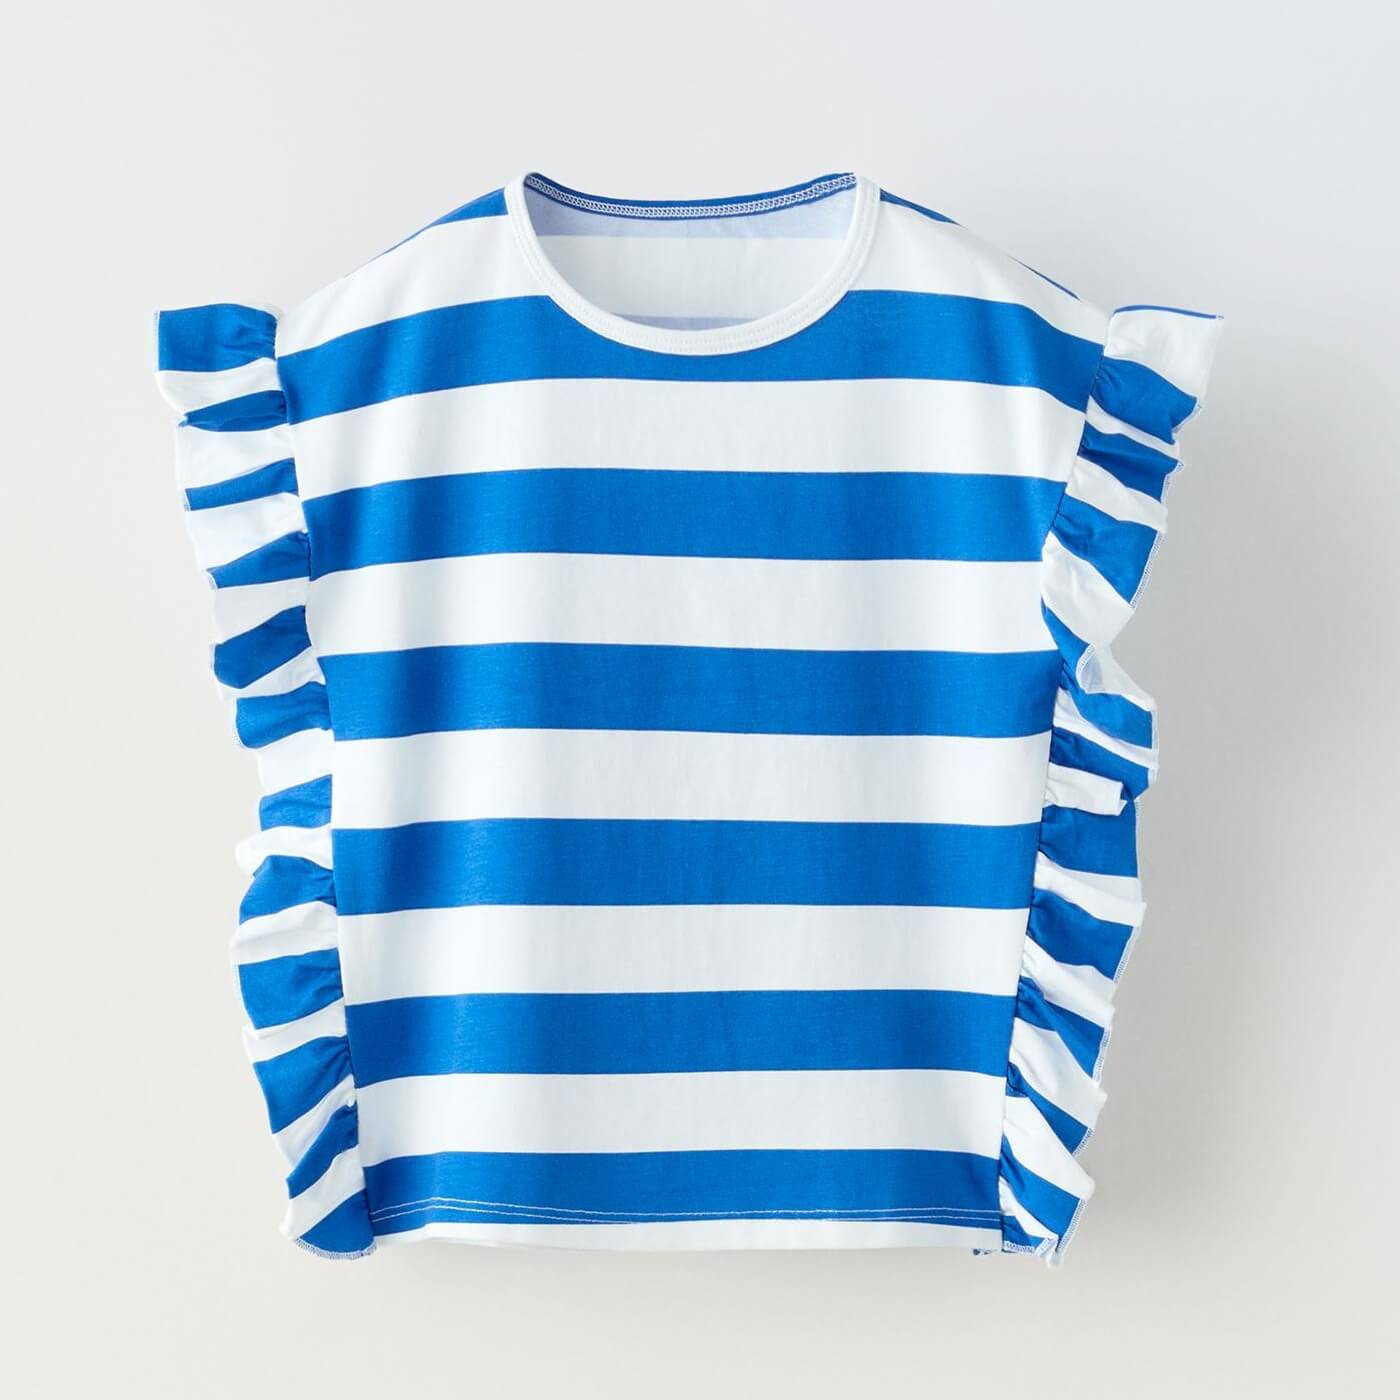 Футболка Zara Striped With Ruffle Trims, синий/белый футболка zara striped with patch белый черный